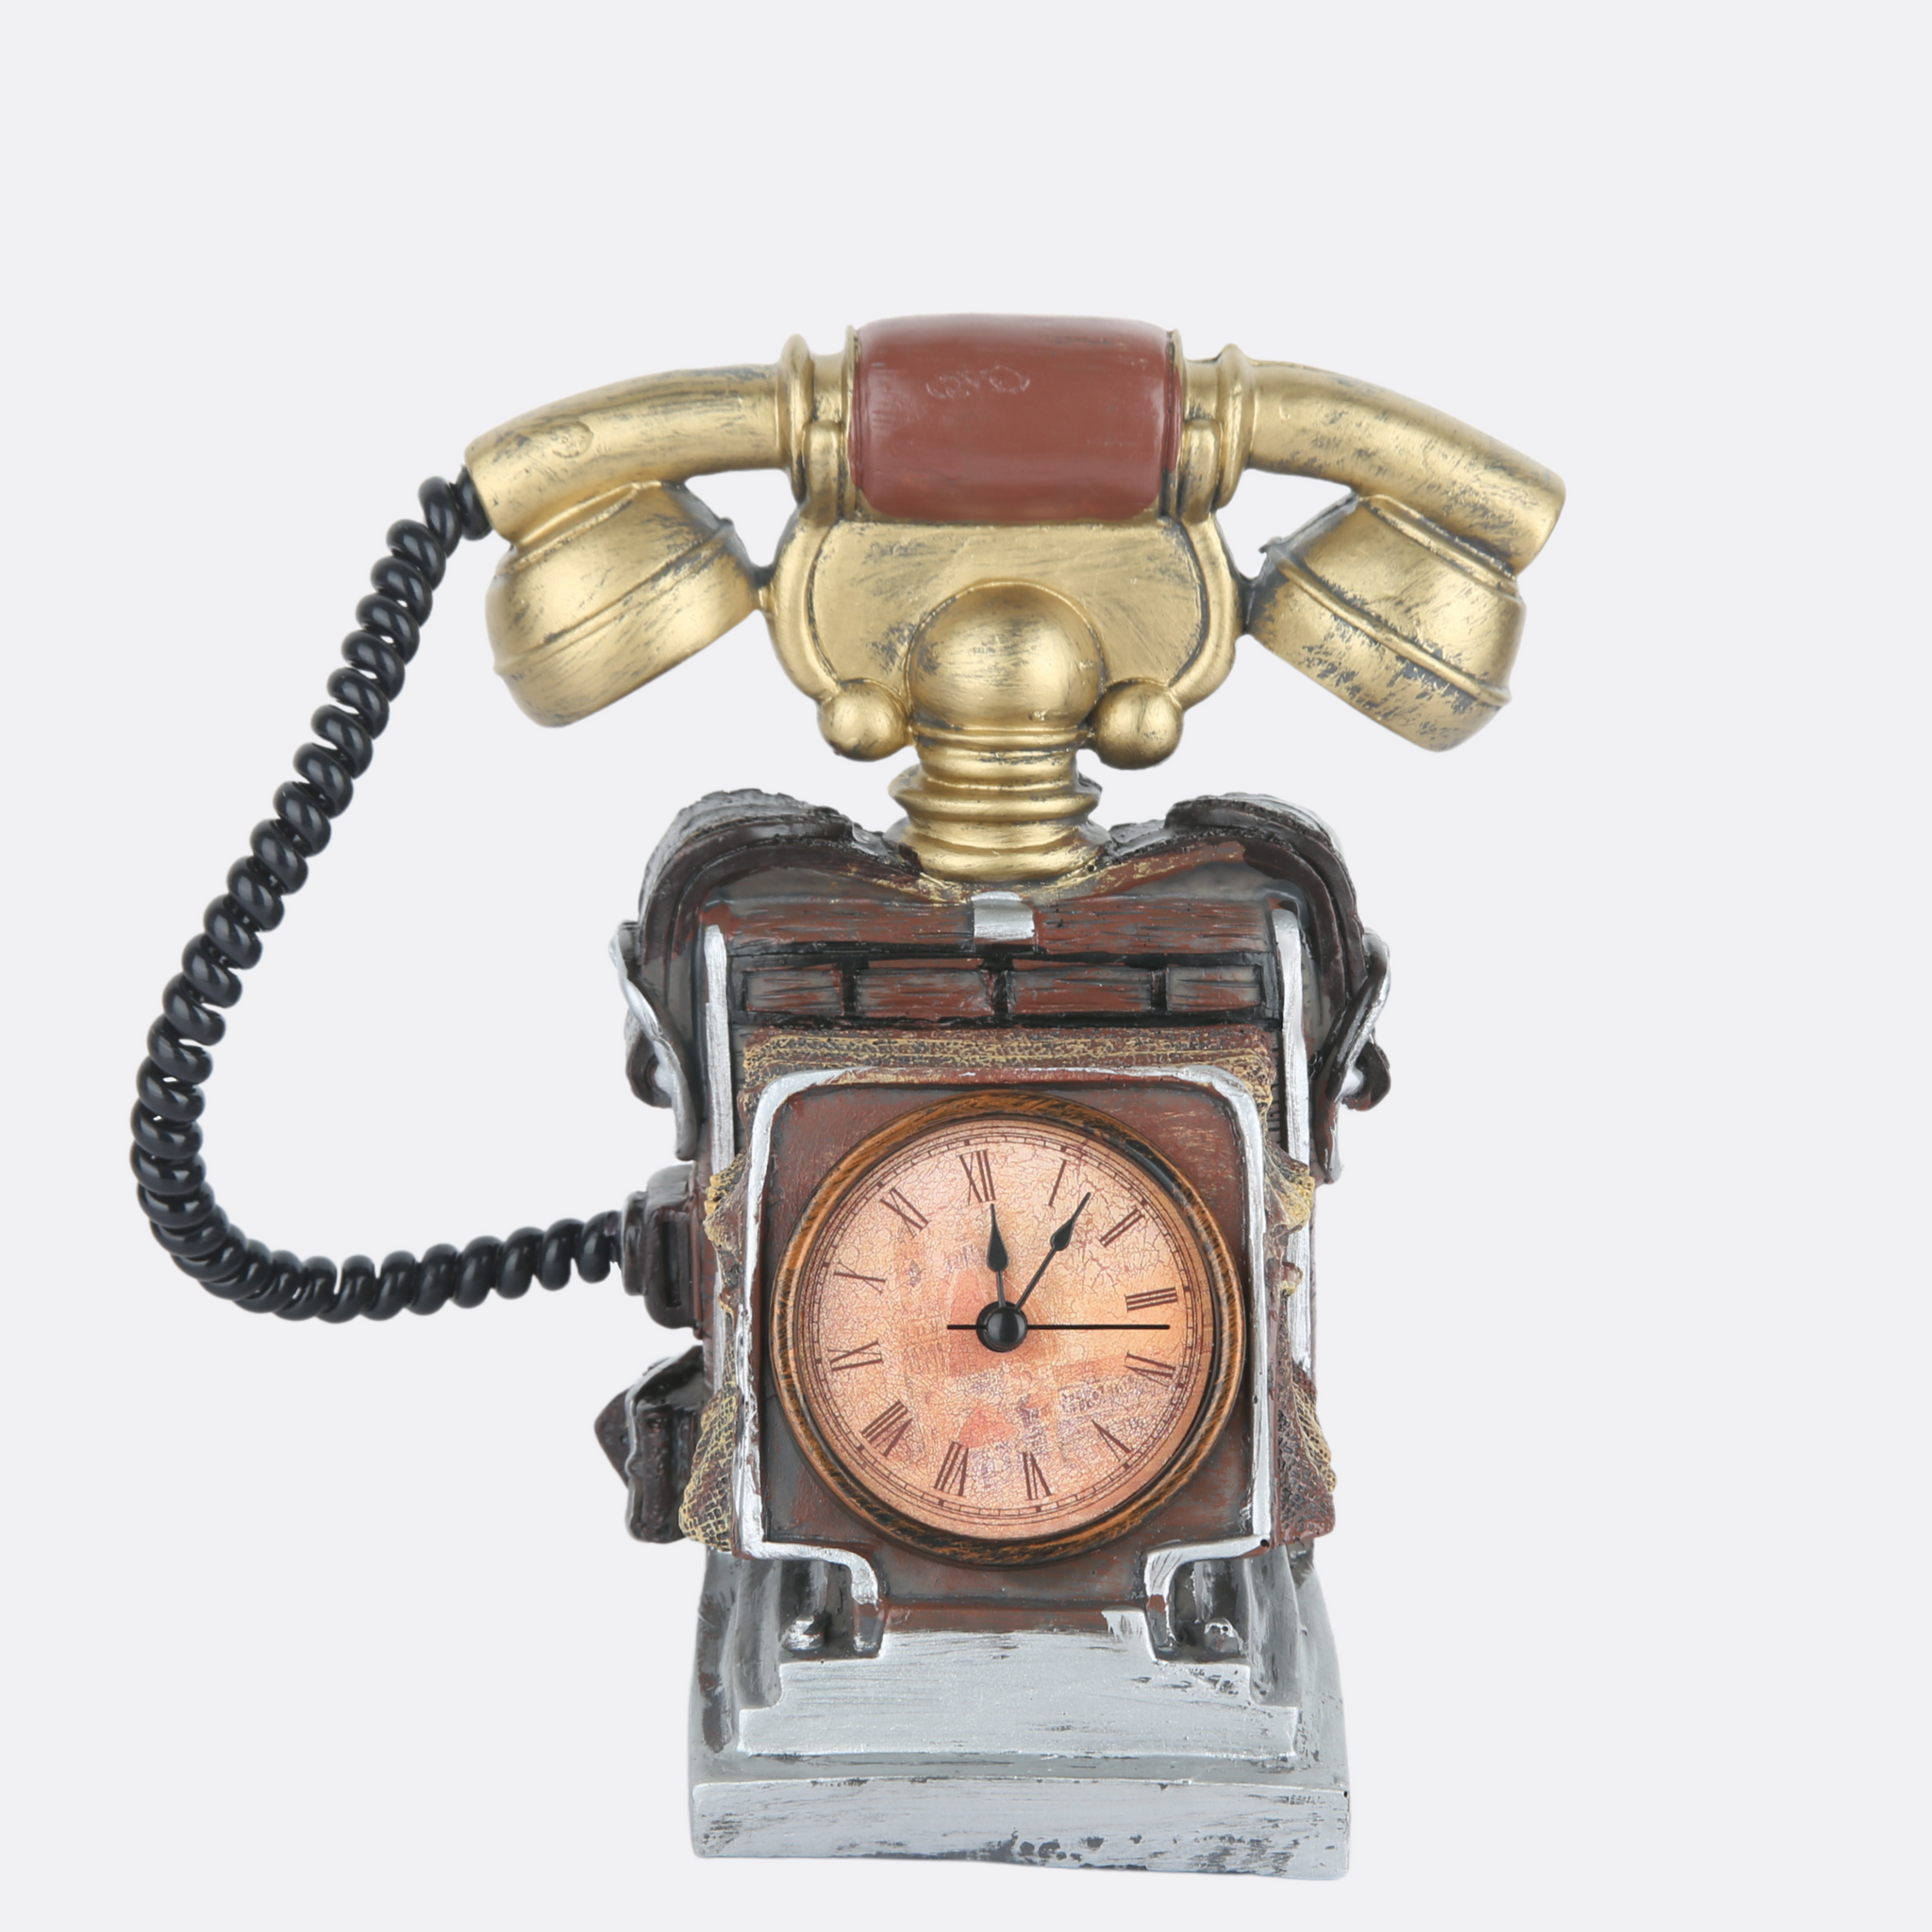 Decorative Vintage Telephone With Clock